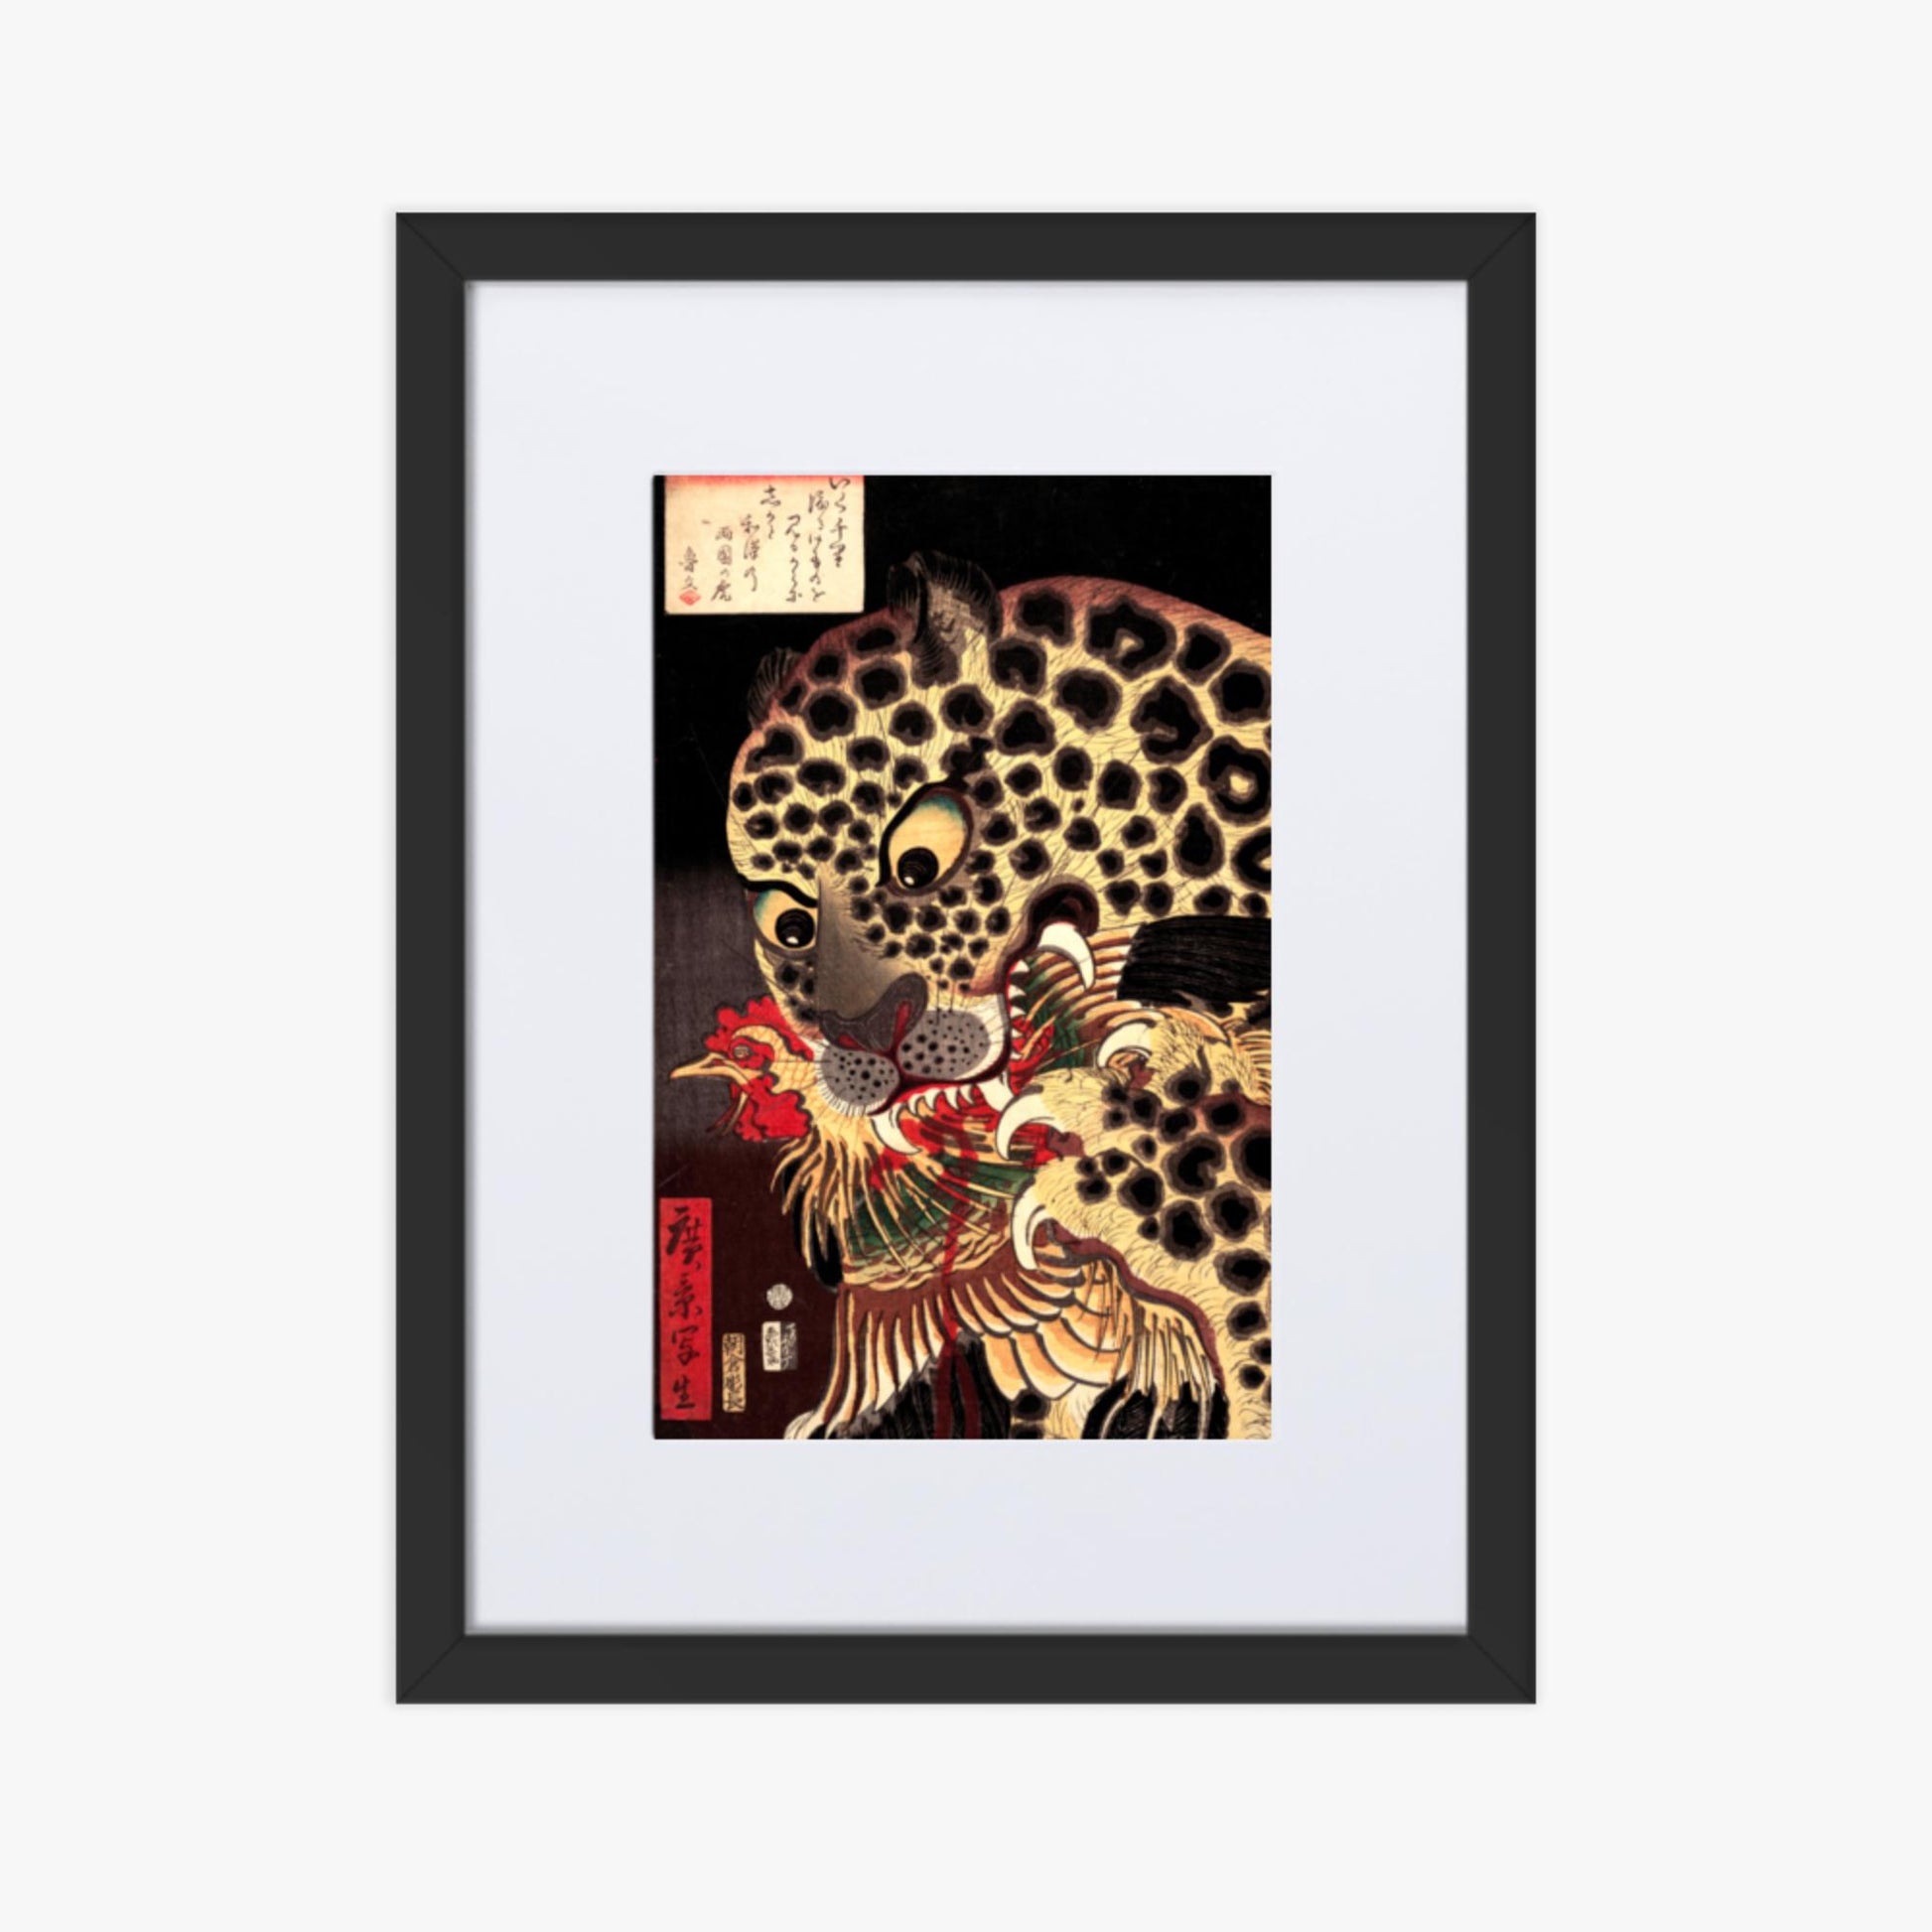 Utagawa Hirokage - The Tiger of Ryōkoku 30x40 cm Poster With Black Frame